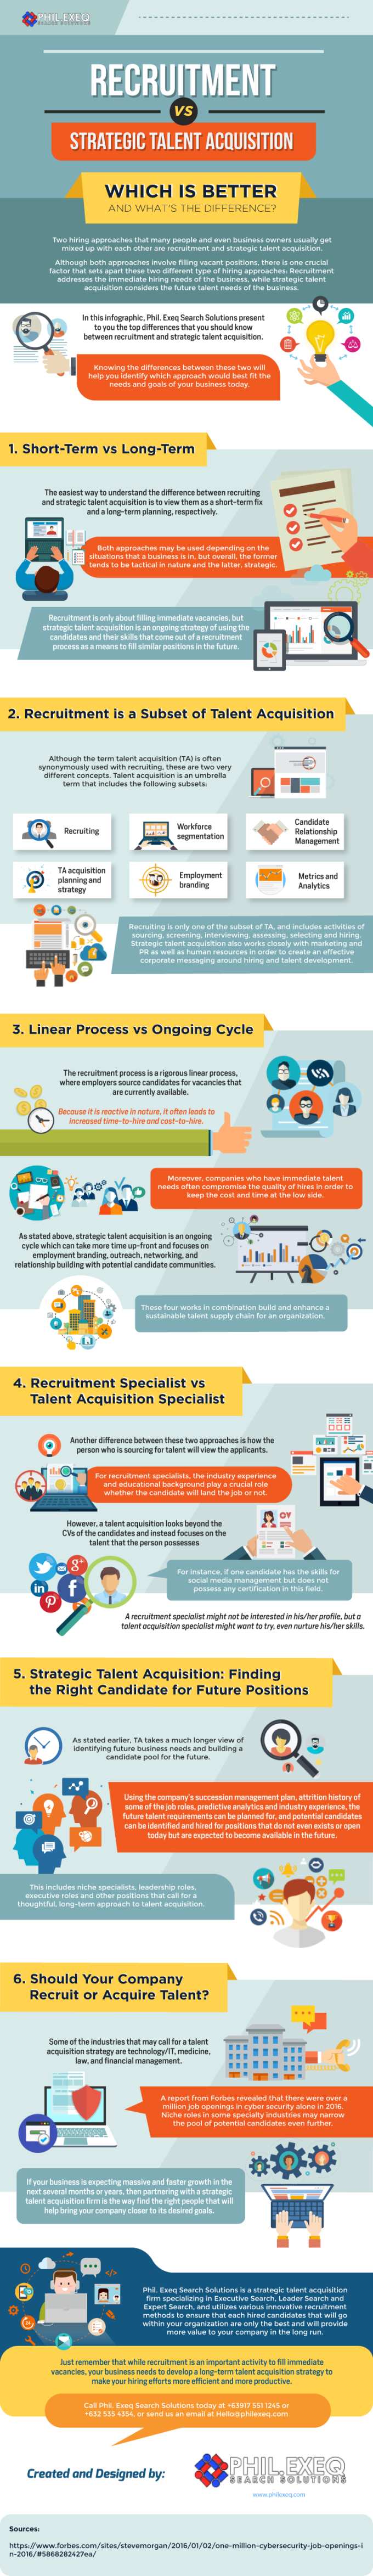 recruitment vs strategic talent acquisition